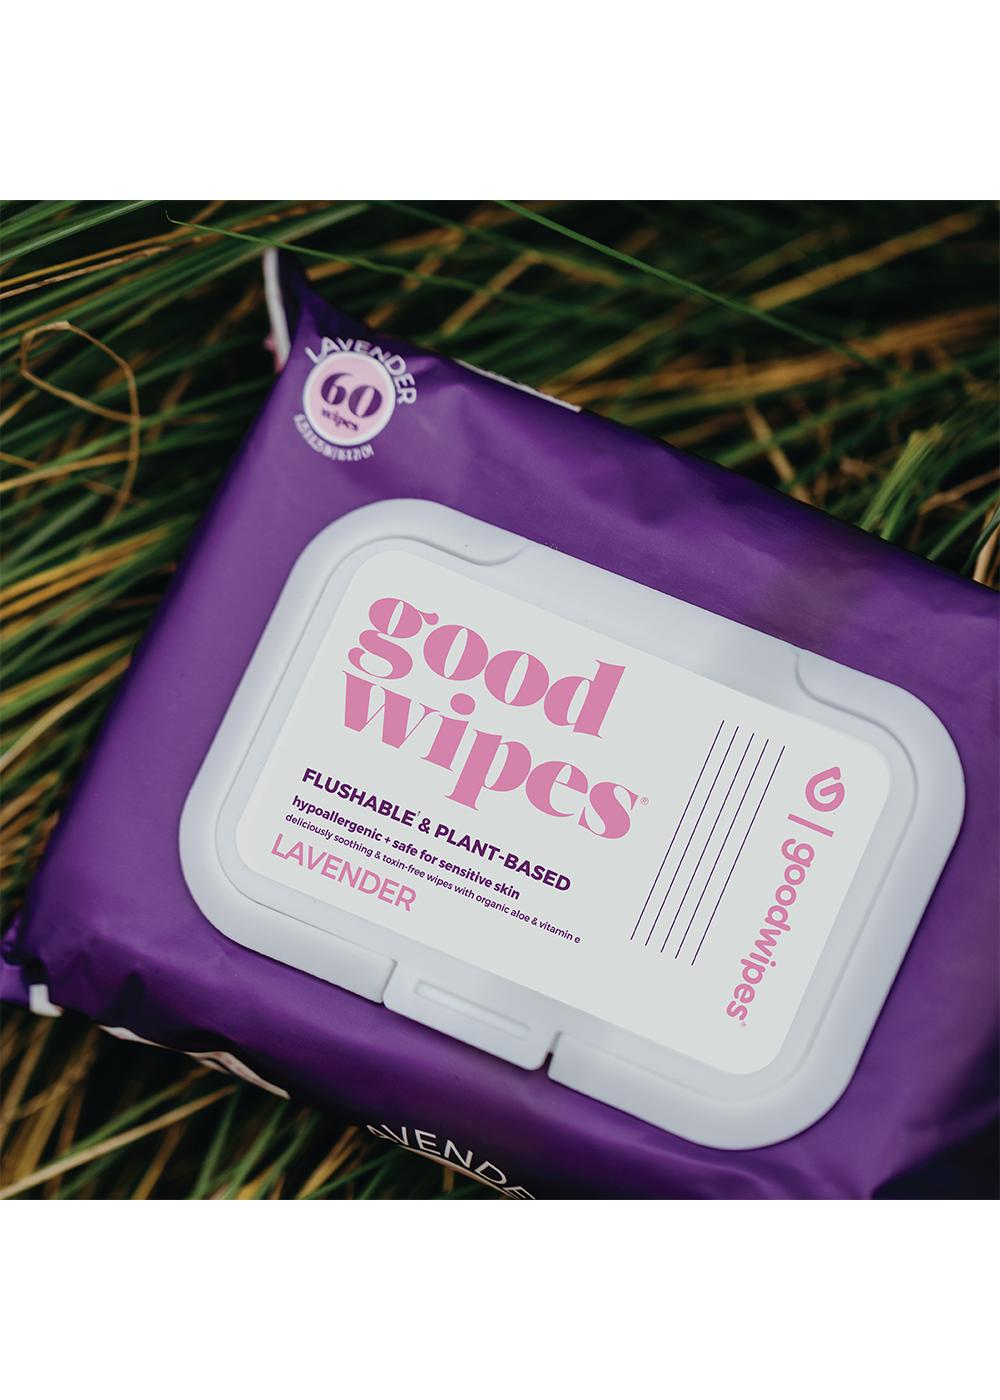 Goodwipes Flushable & Biodegradable Wipes - Lavender; image 3 of 4